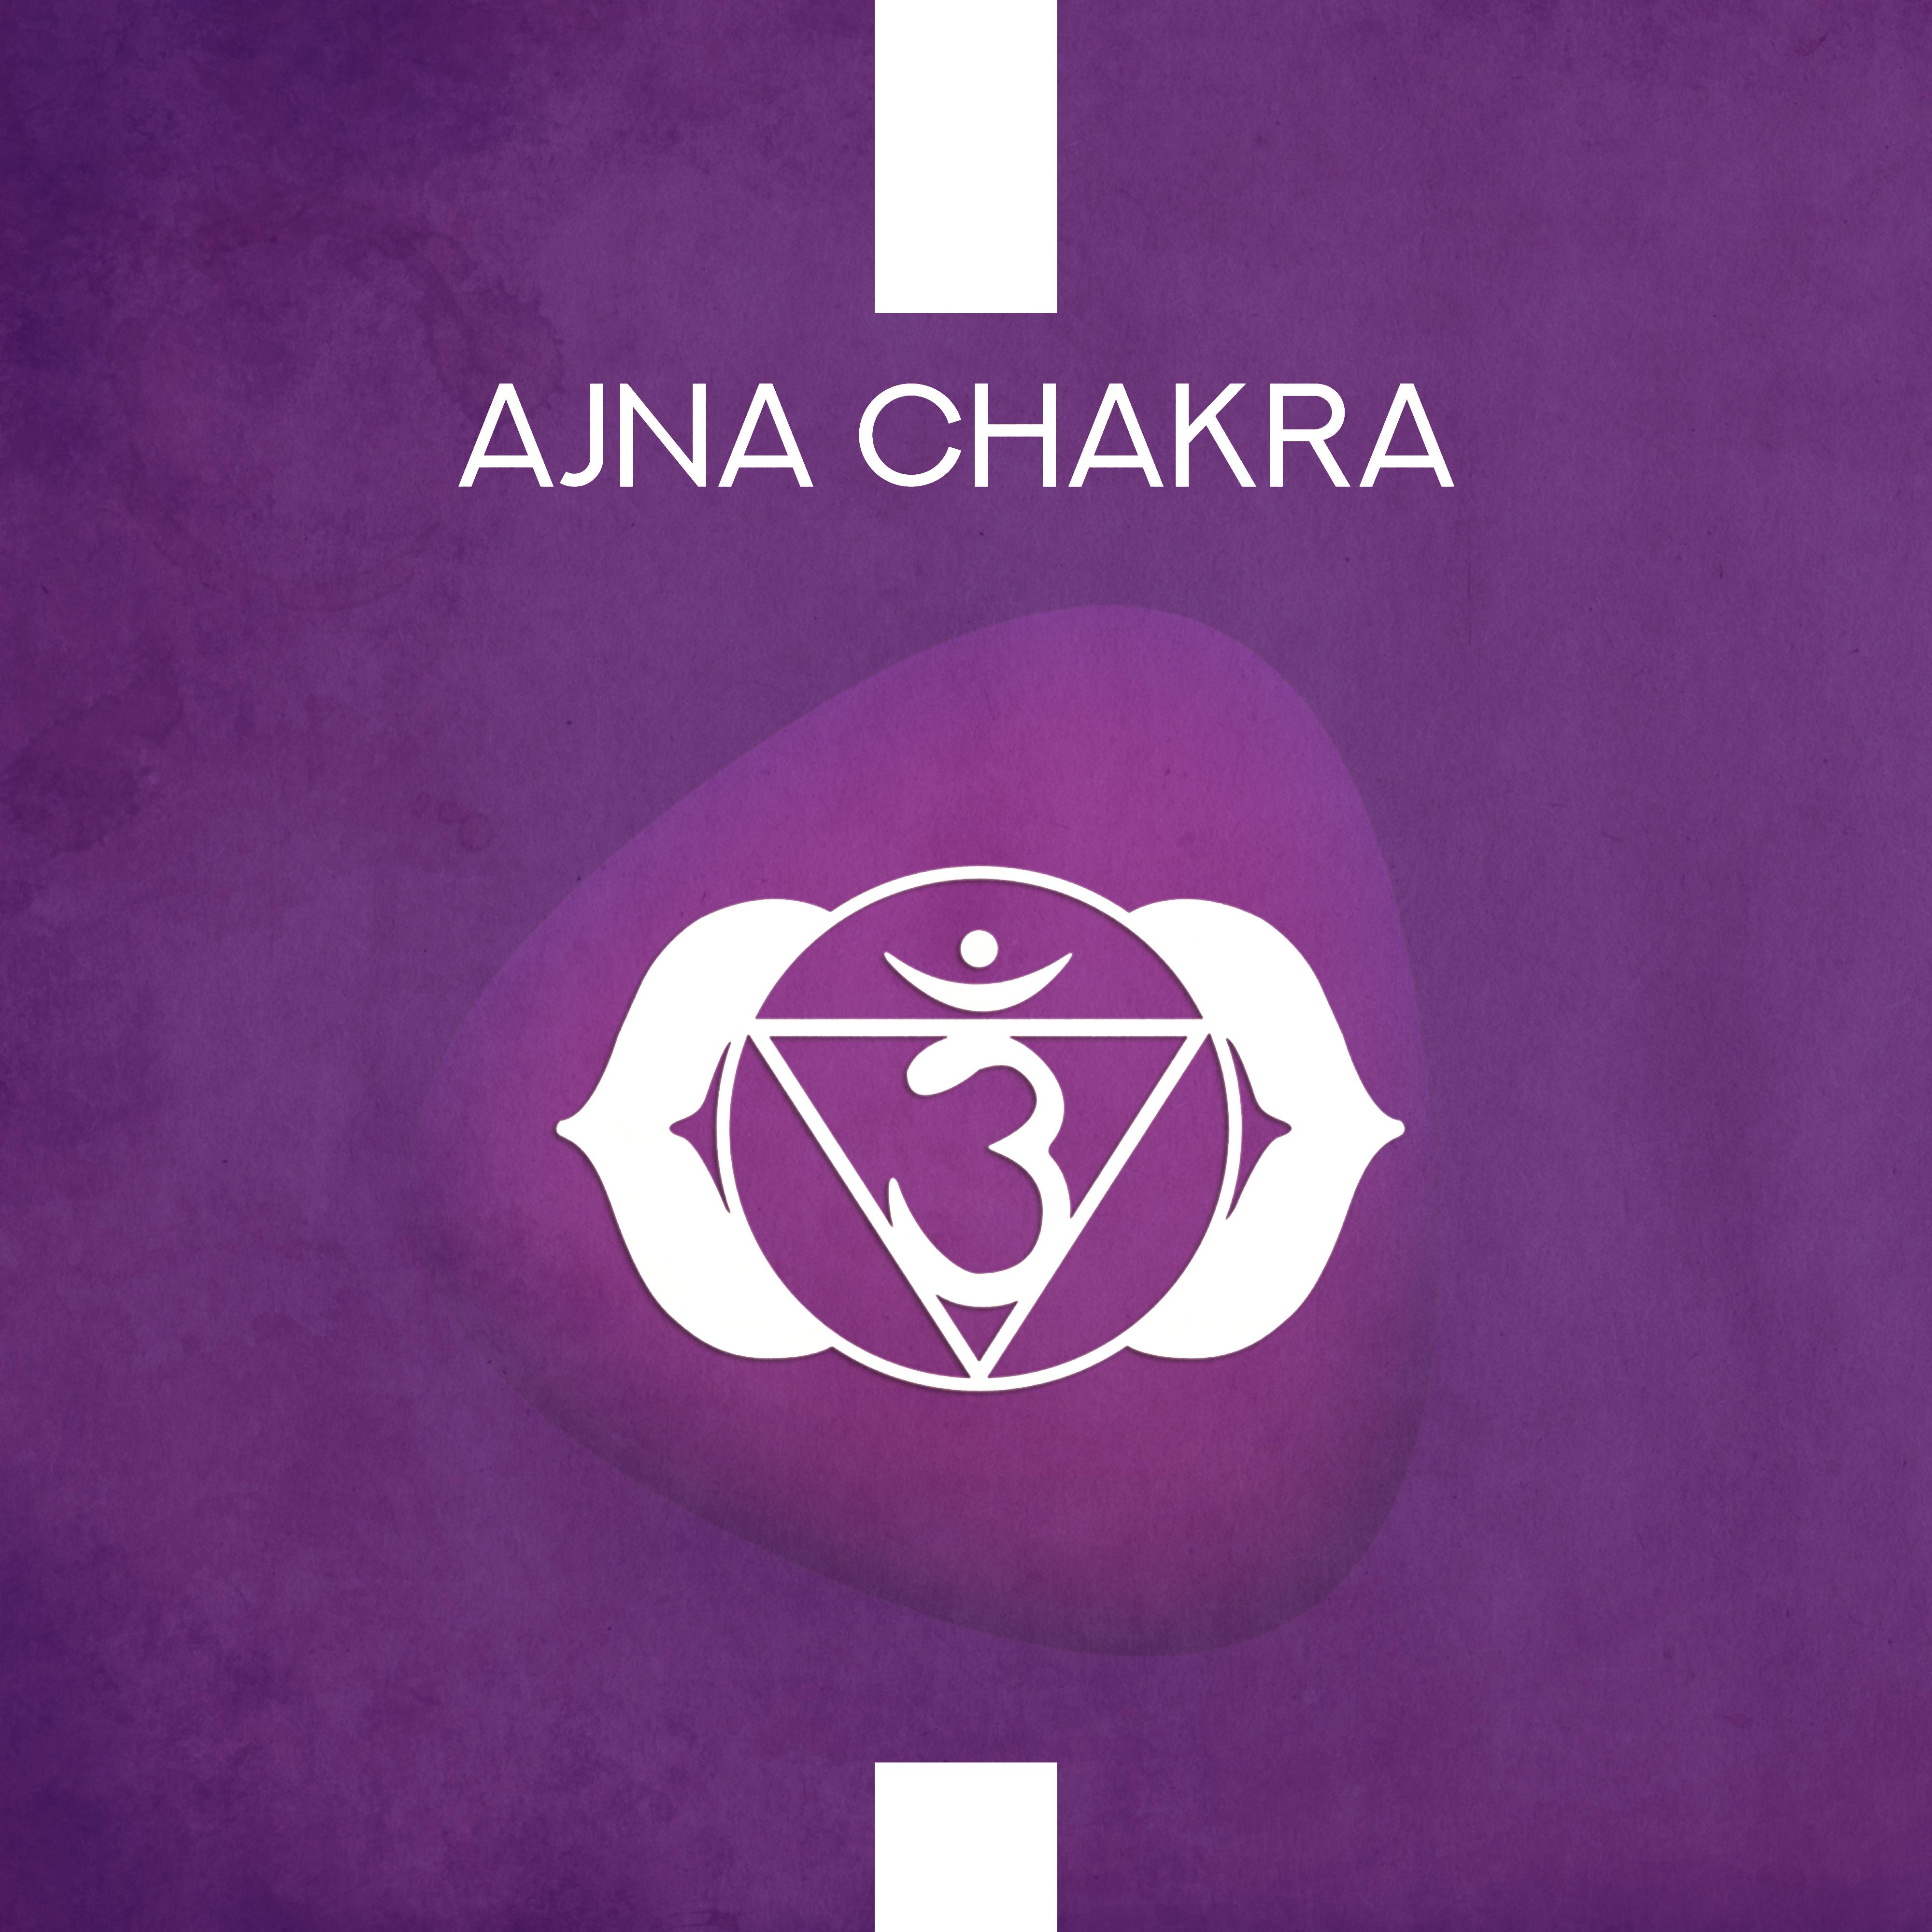 Ajna Chakra - Meditative Music to Open the Third Eye